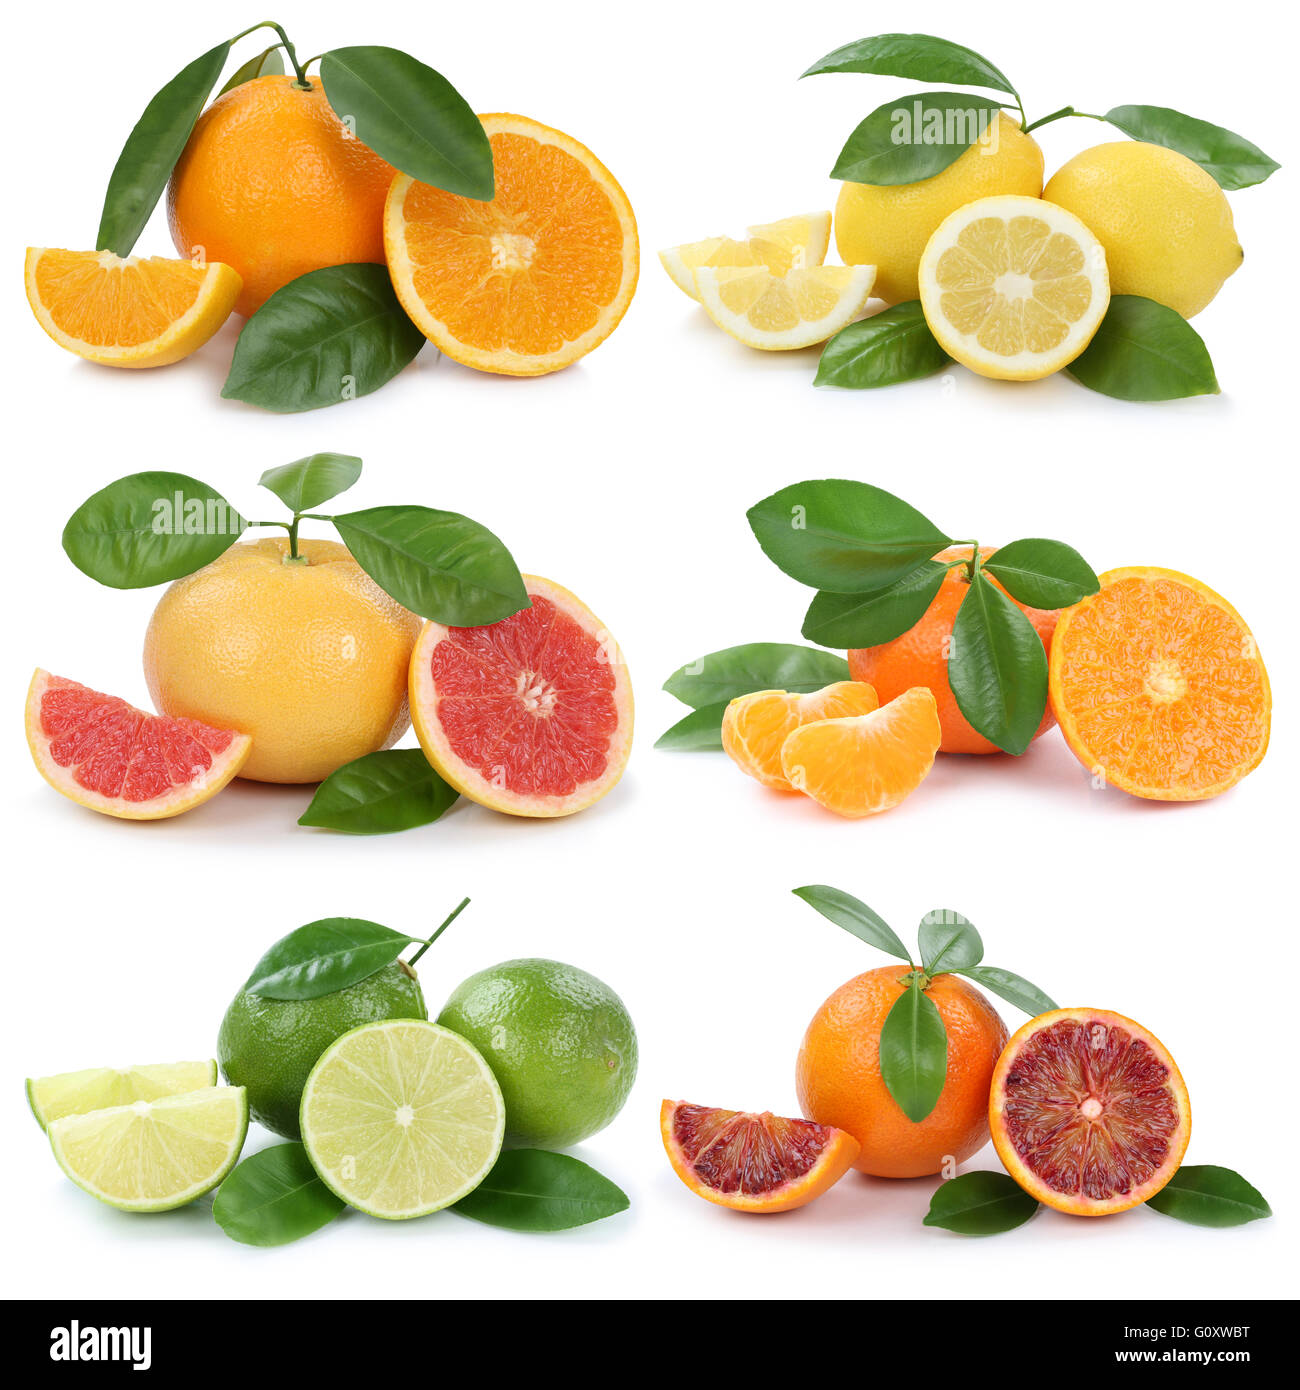 Collection of oranges lemons grapefruit fruits isolated on a white background Stock Photo